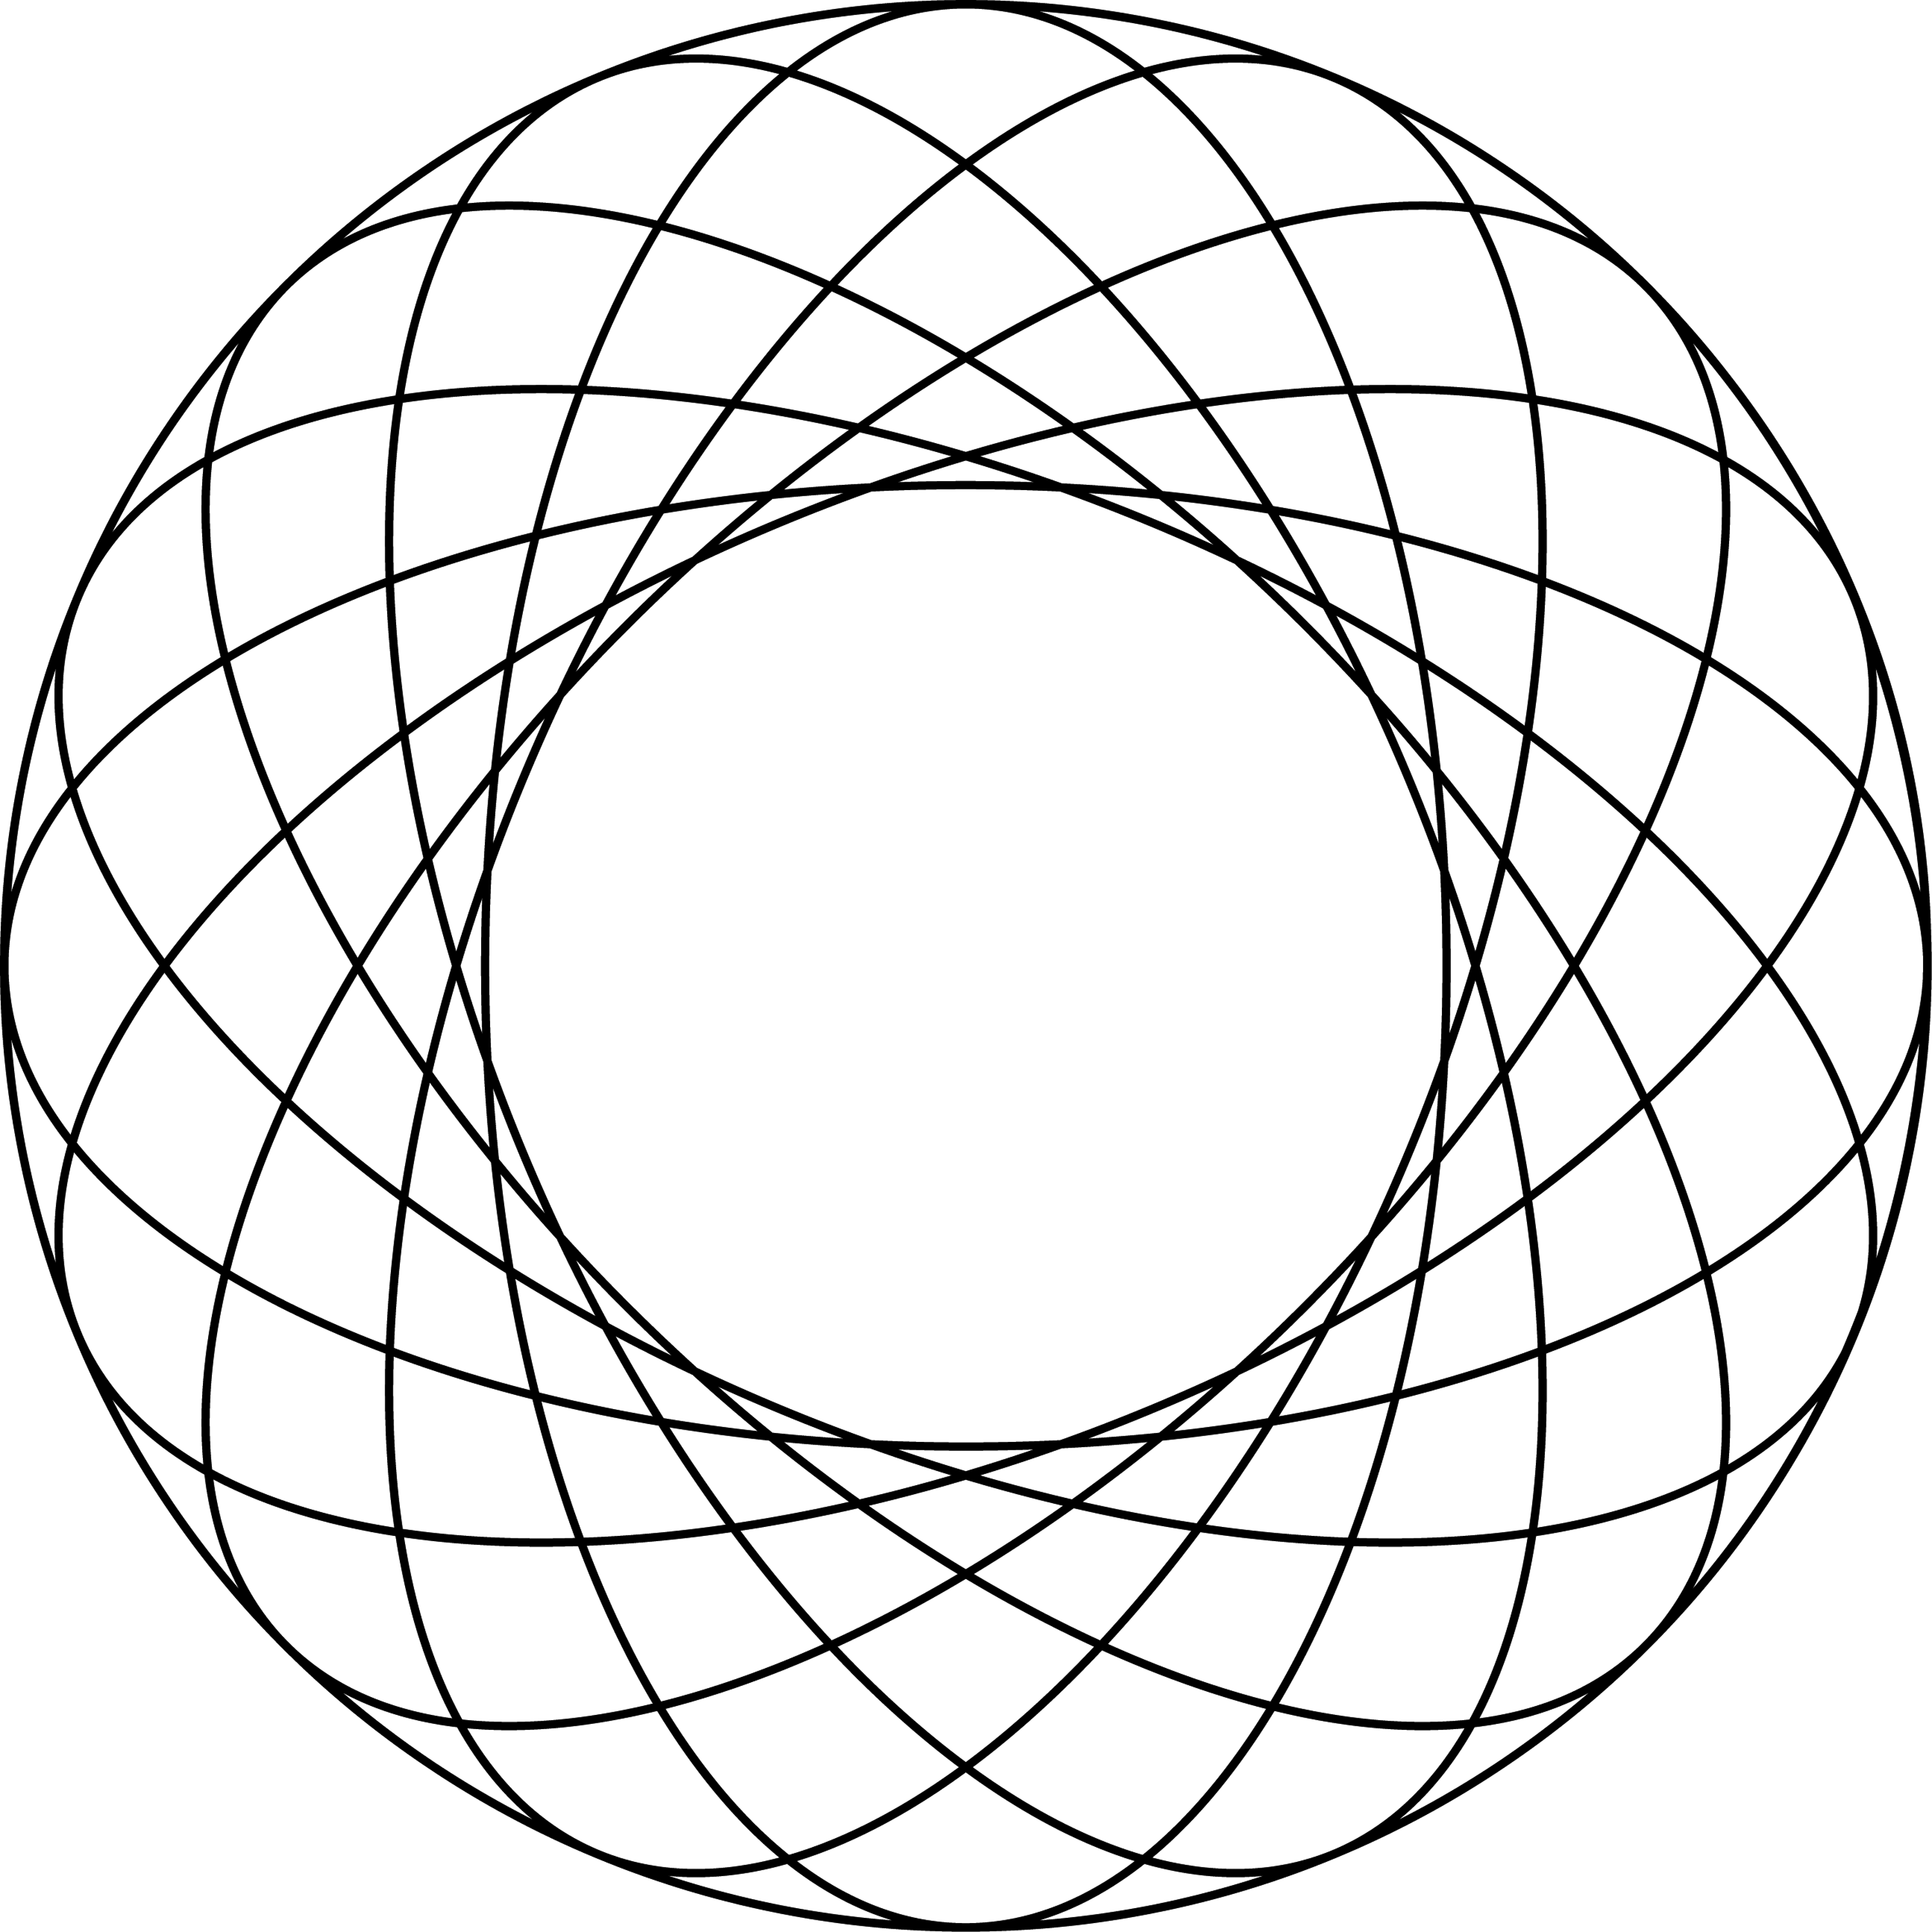 8 Rotated Concentric Ellipses | ClipArt ETC